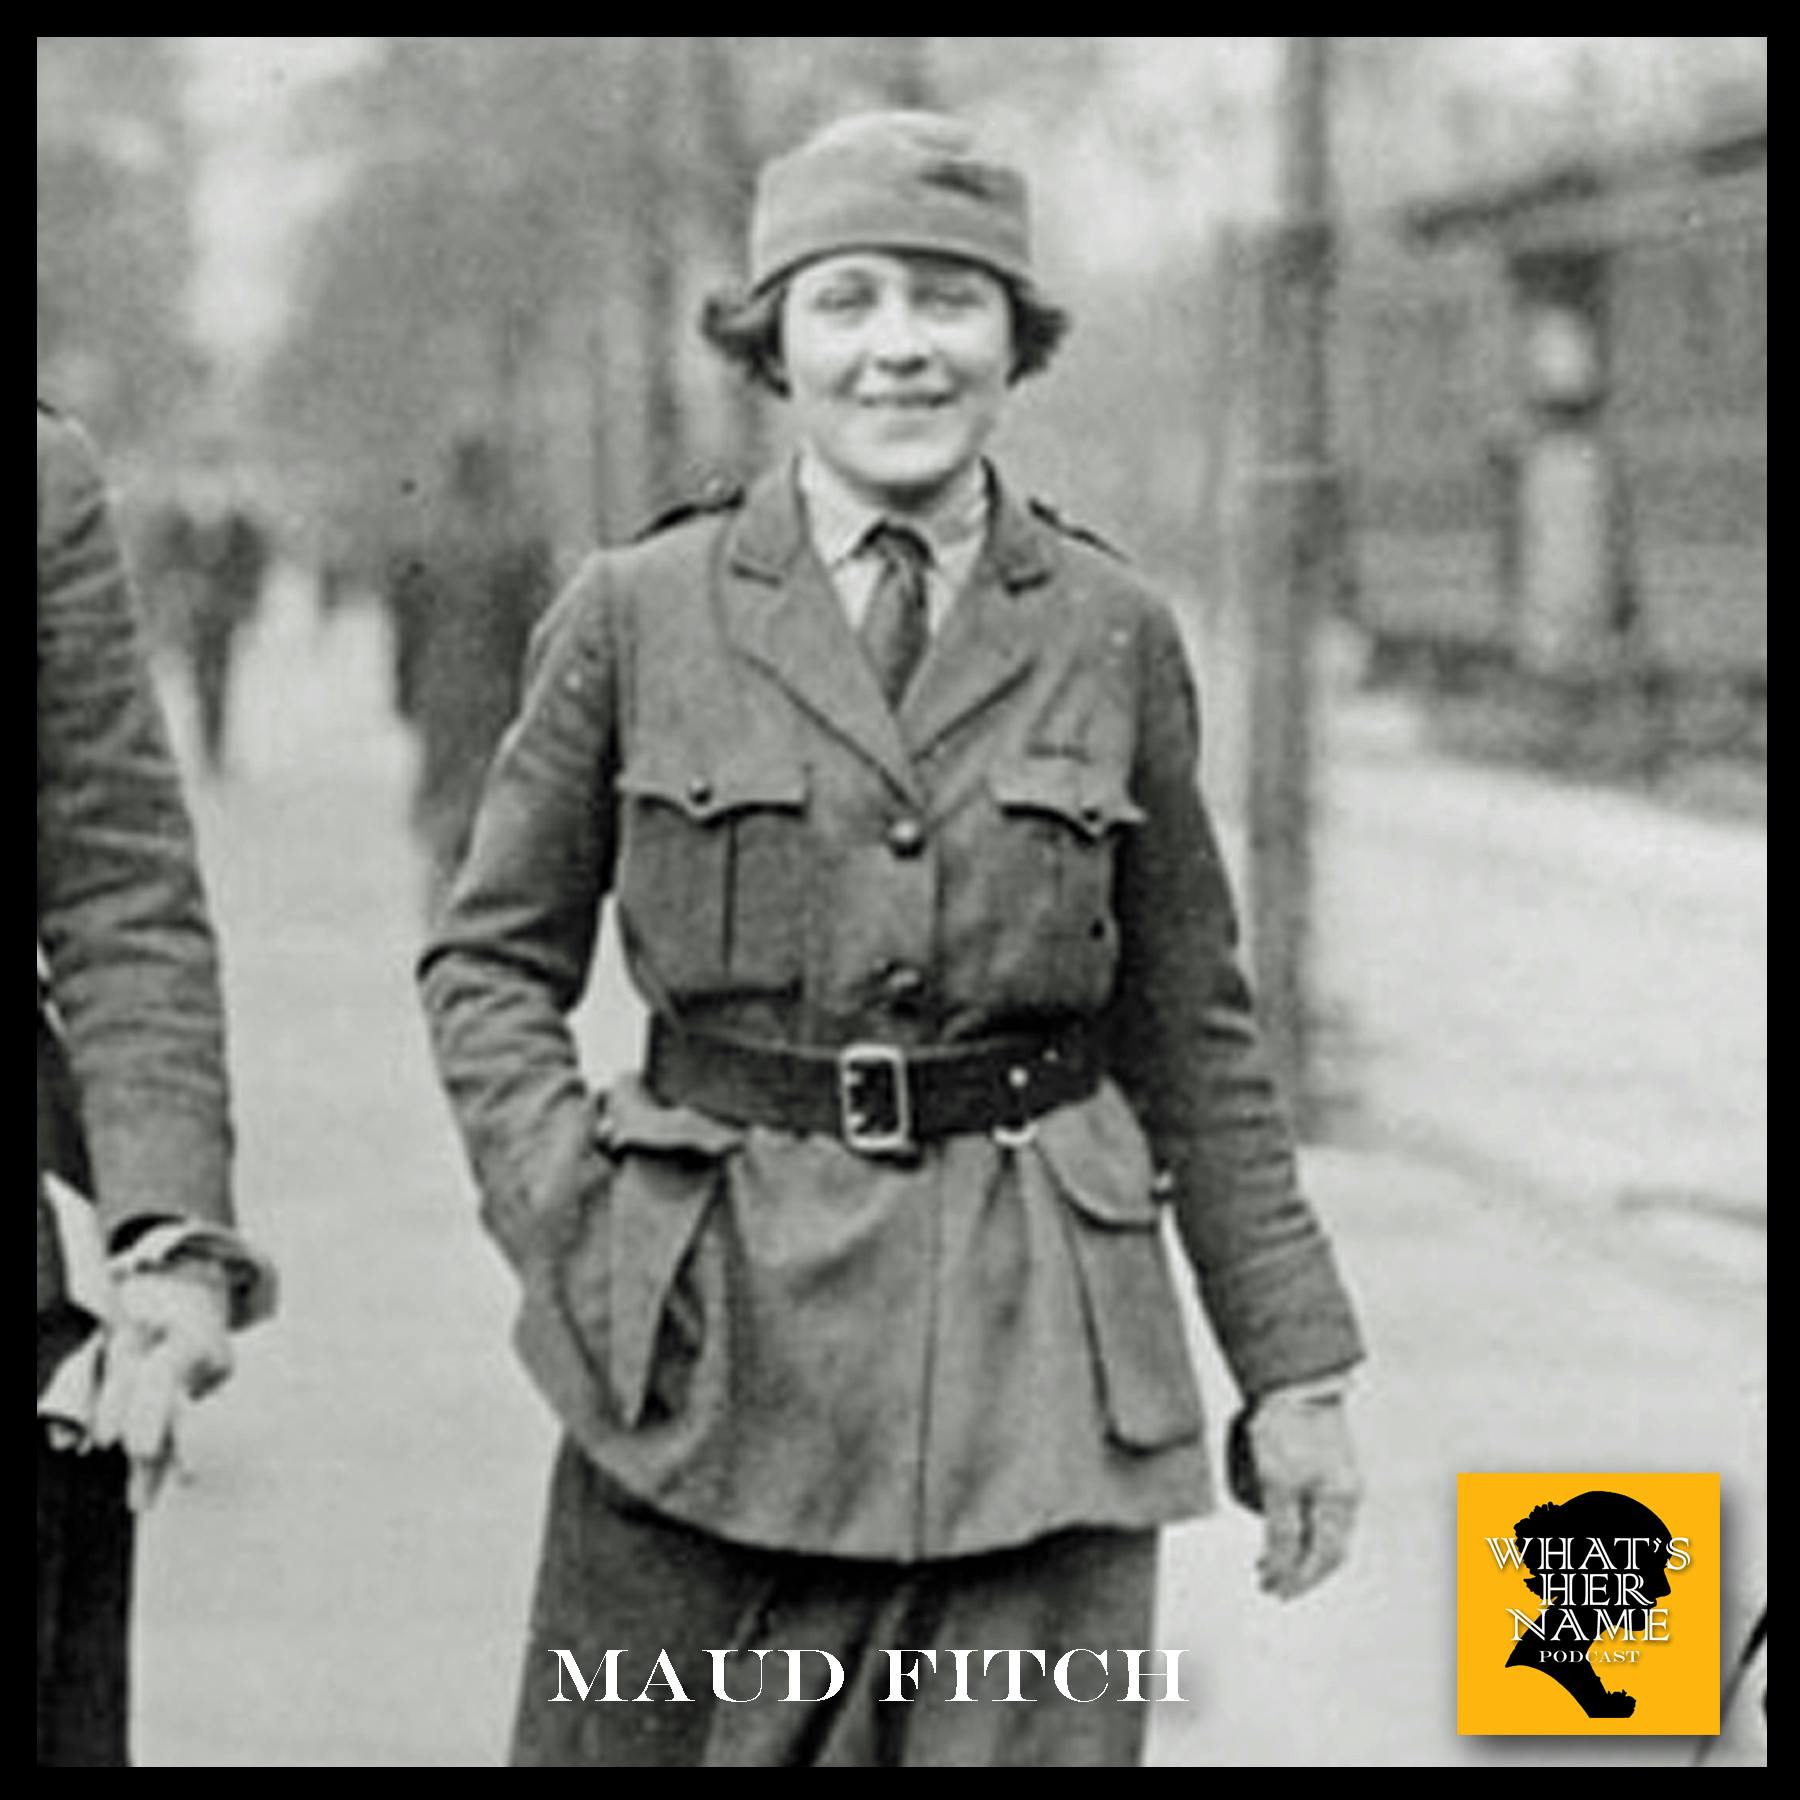 THE AMBULANCE DRIVER Maud Fitch